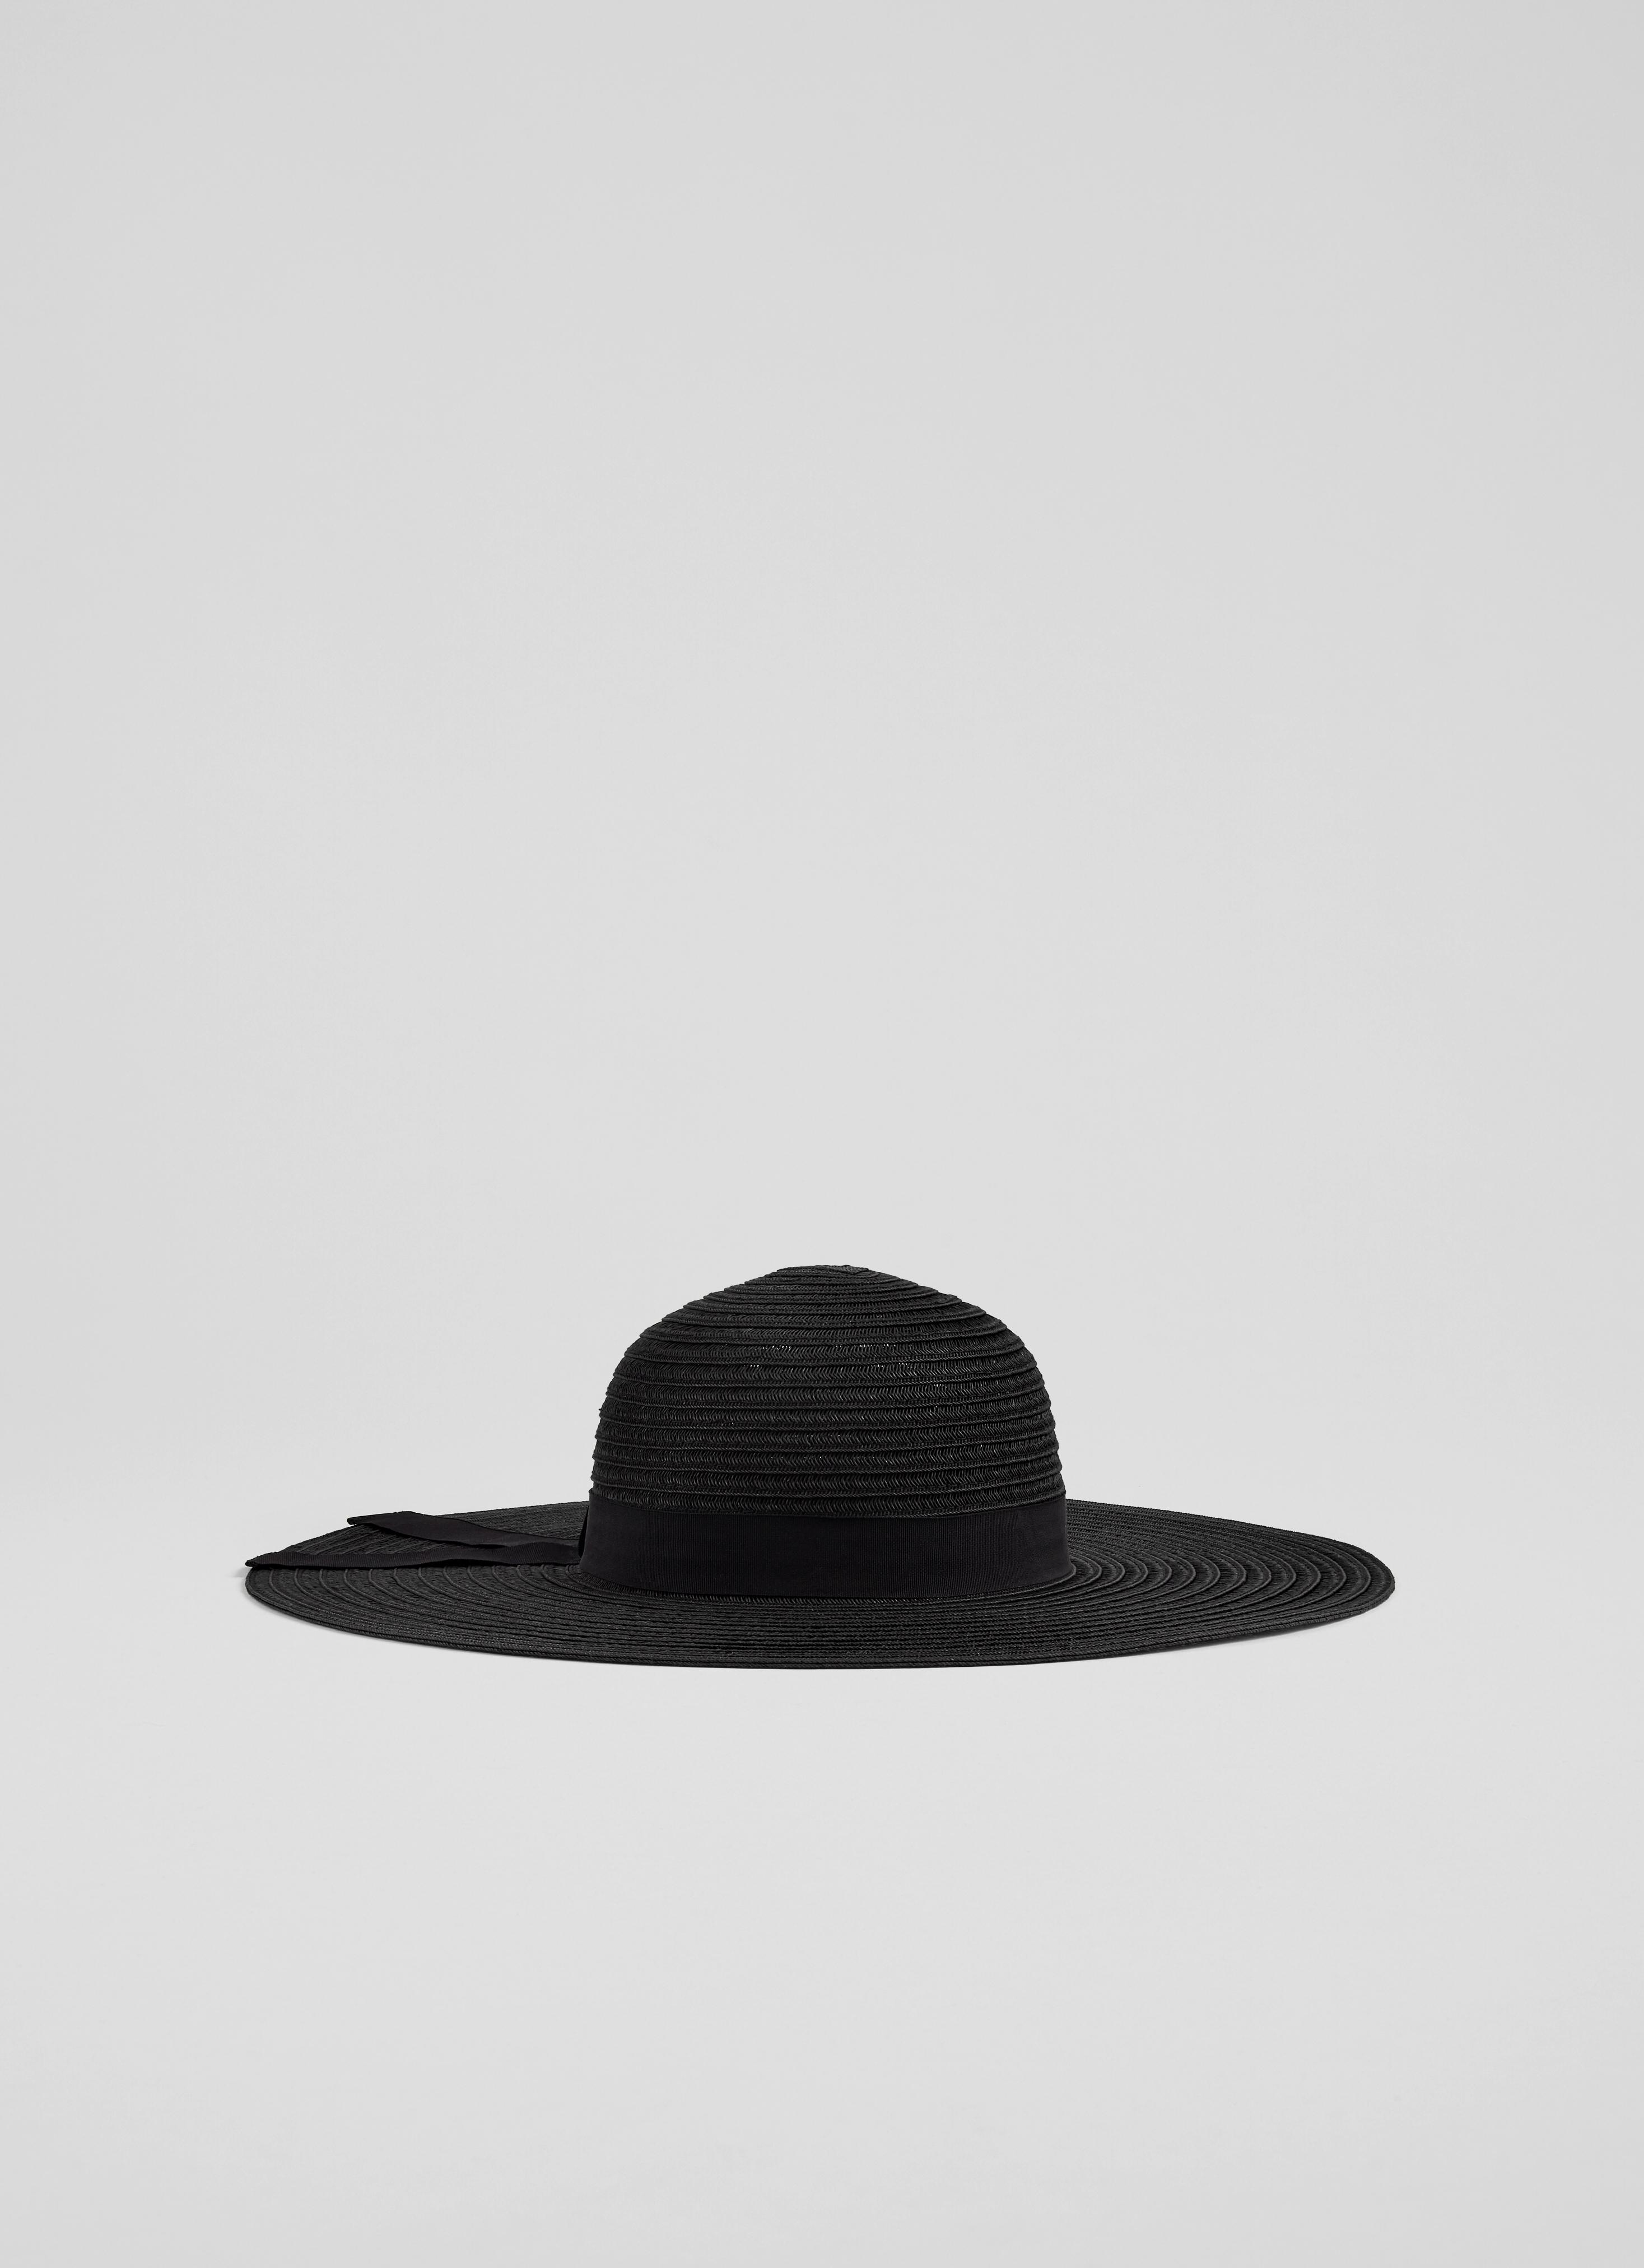 L.K.Bennett Savannah Black Raffia Floppy Sun Hat, Black